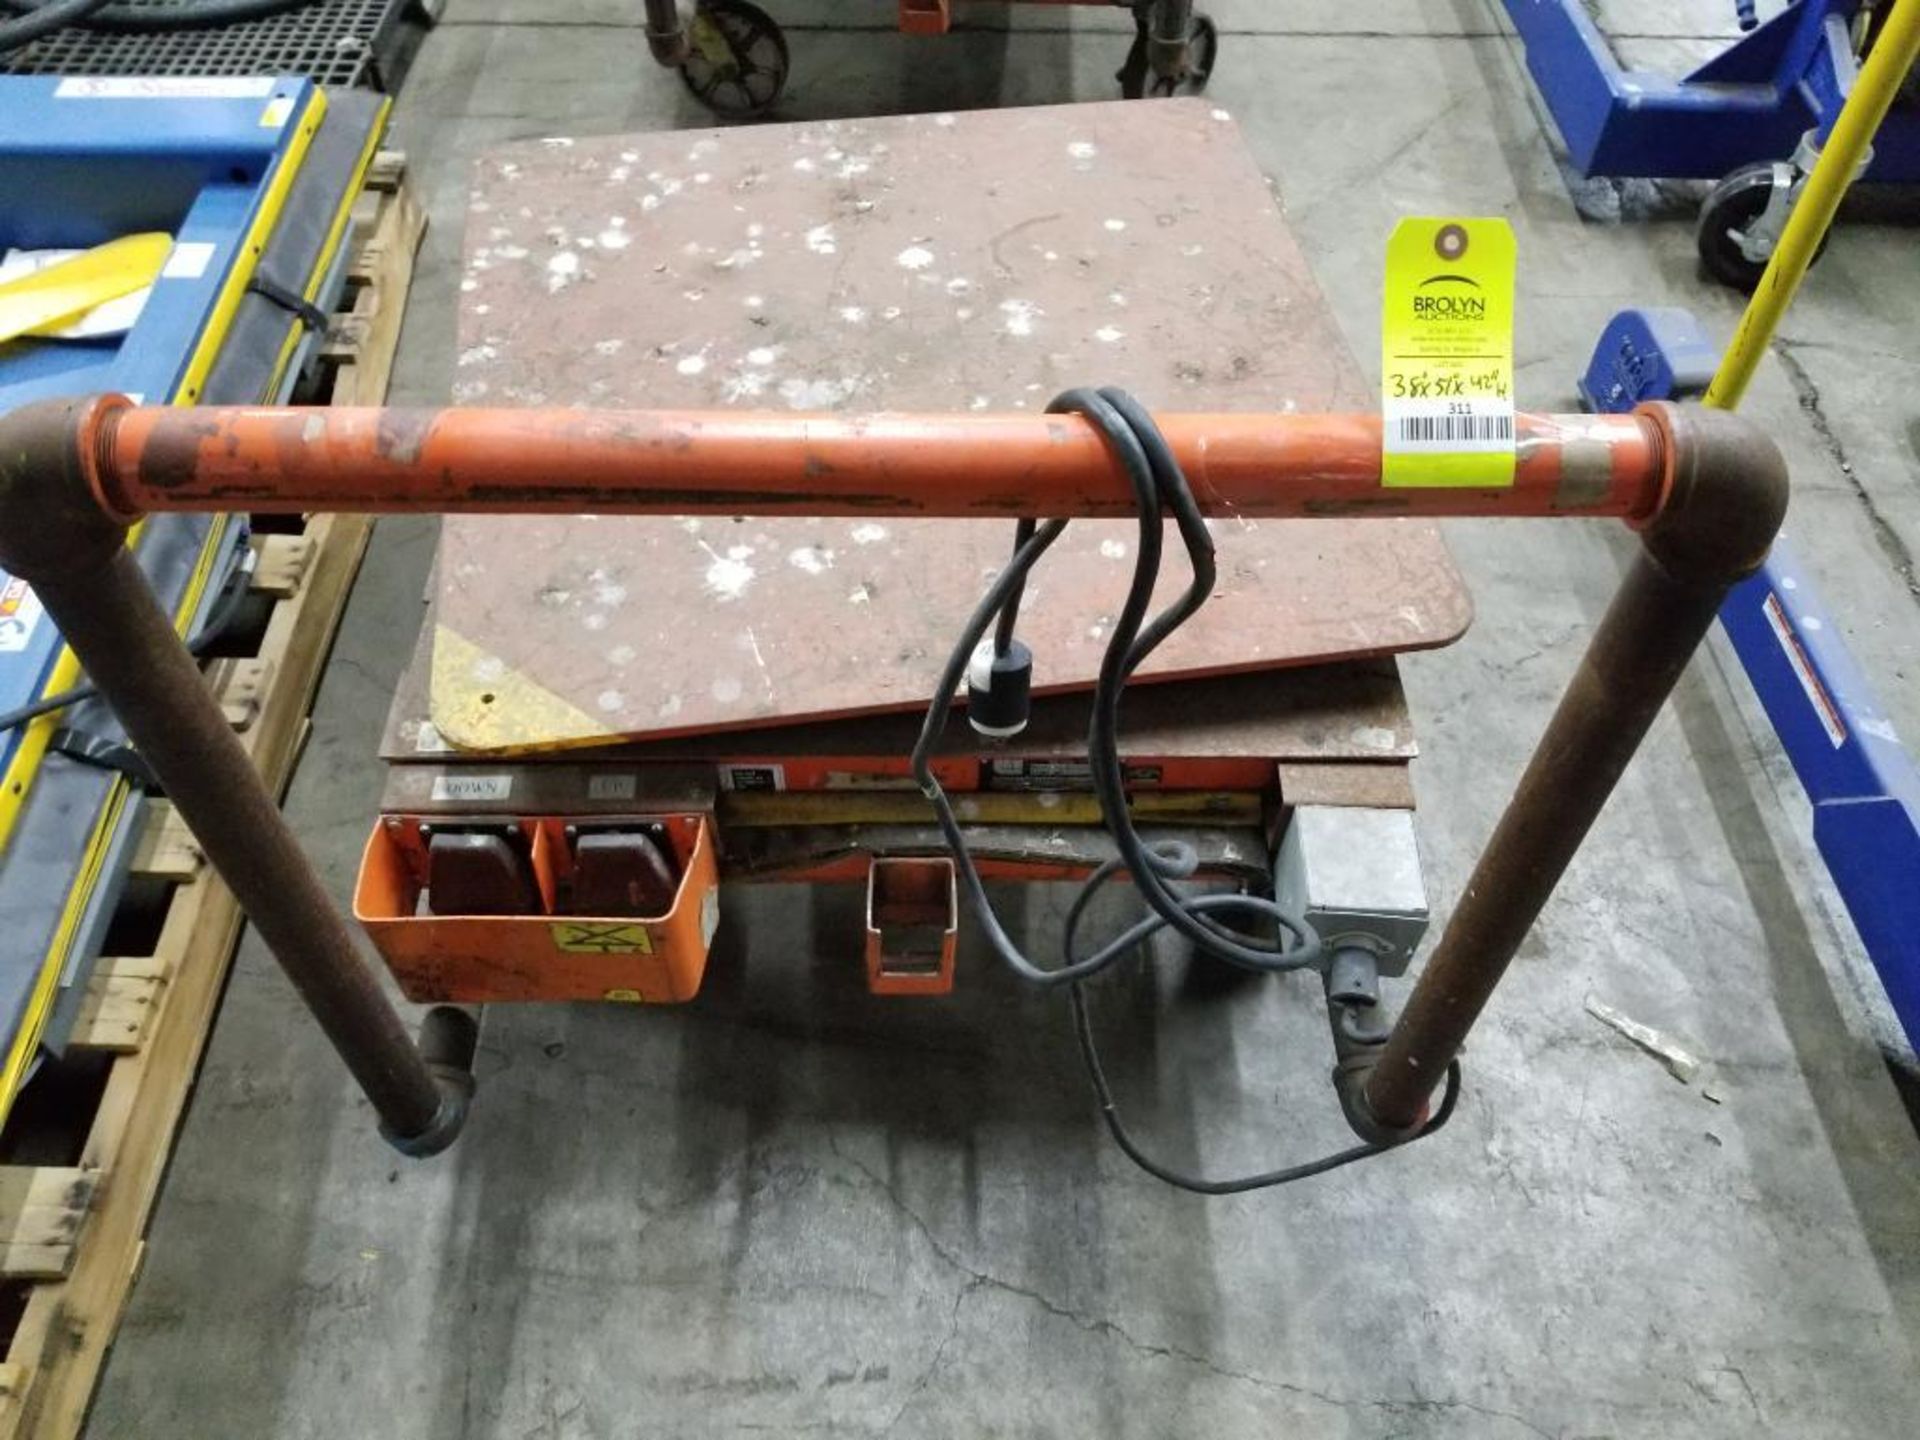 3000lb Lee Presto scissor lift table on casters. Model XL38-30. 110v single phase. - Image 2 of 5